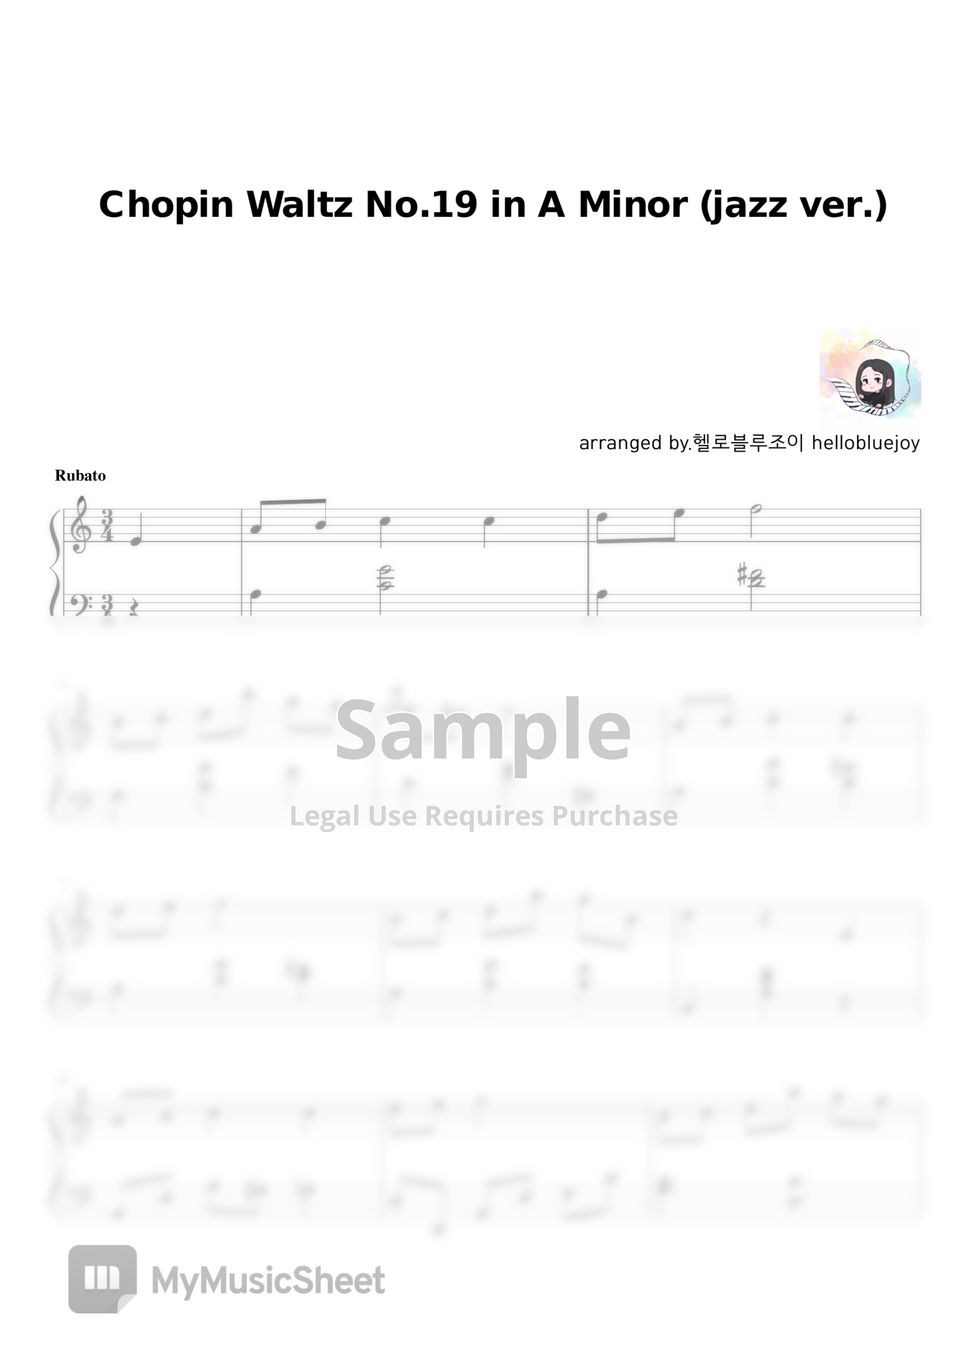 Chopin - Chopin Waltz No.19 in A Minor (jazz ver.) by 헬로블루조이 hellobluejoy